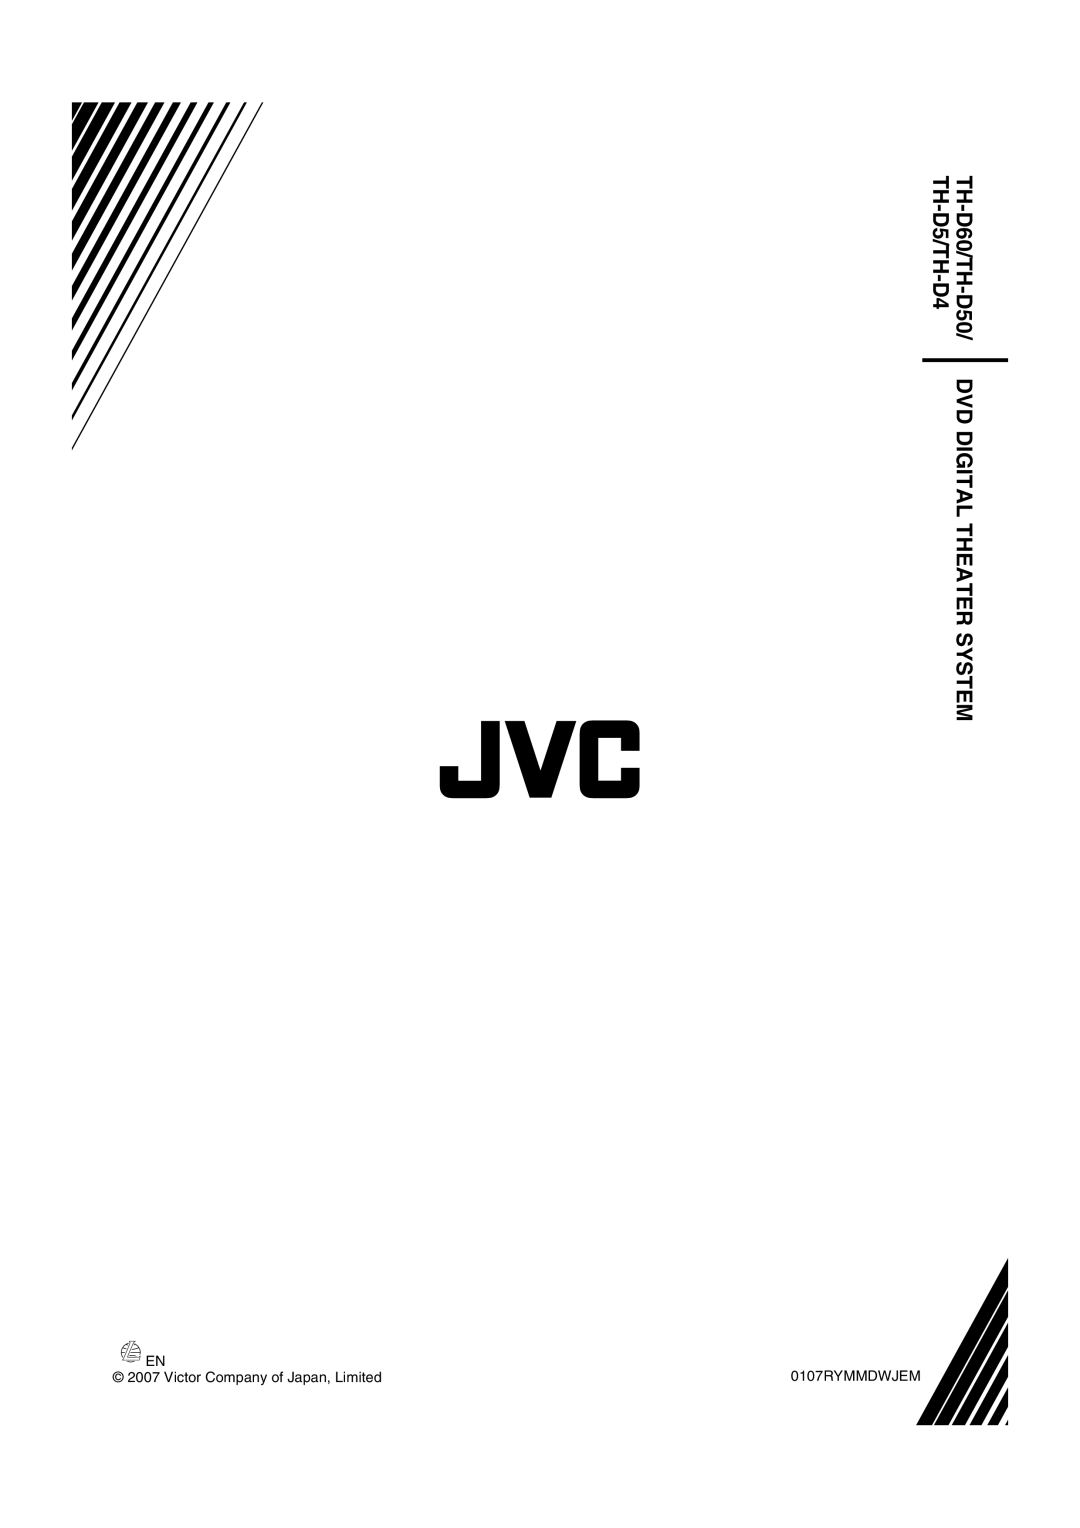 JVC THD60 manual 0107RYMMDWJEM, Victor Company of Japan, Limited, TH-D60/TH-D50/DVD DIGITAL THEATER SYSTEM, TH-D5/TH-D4 